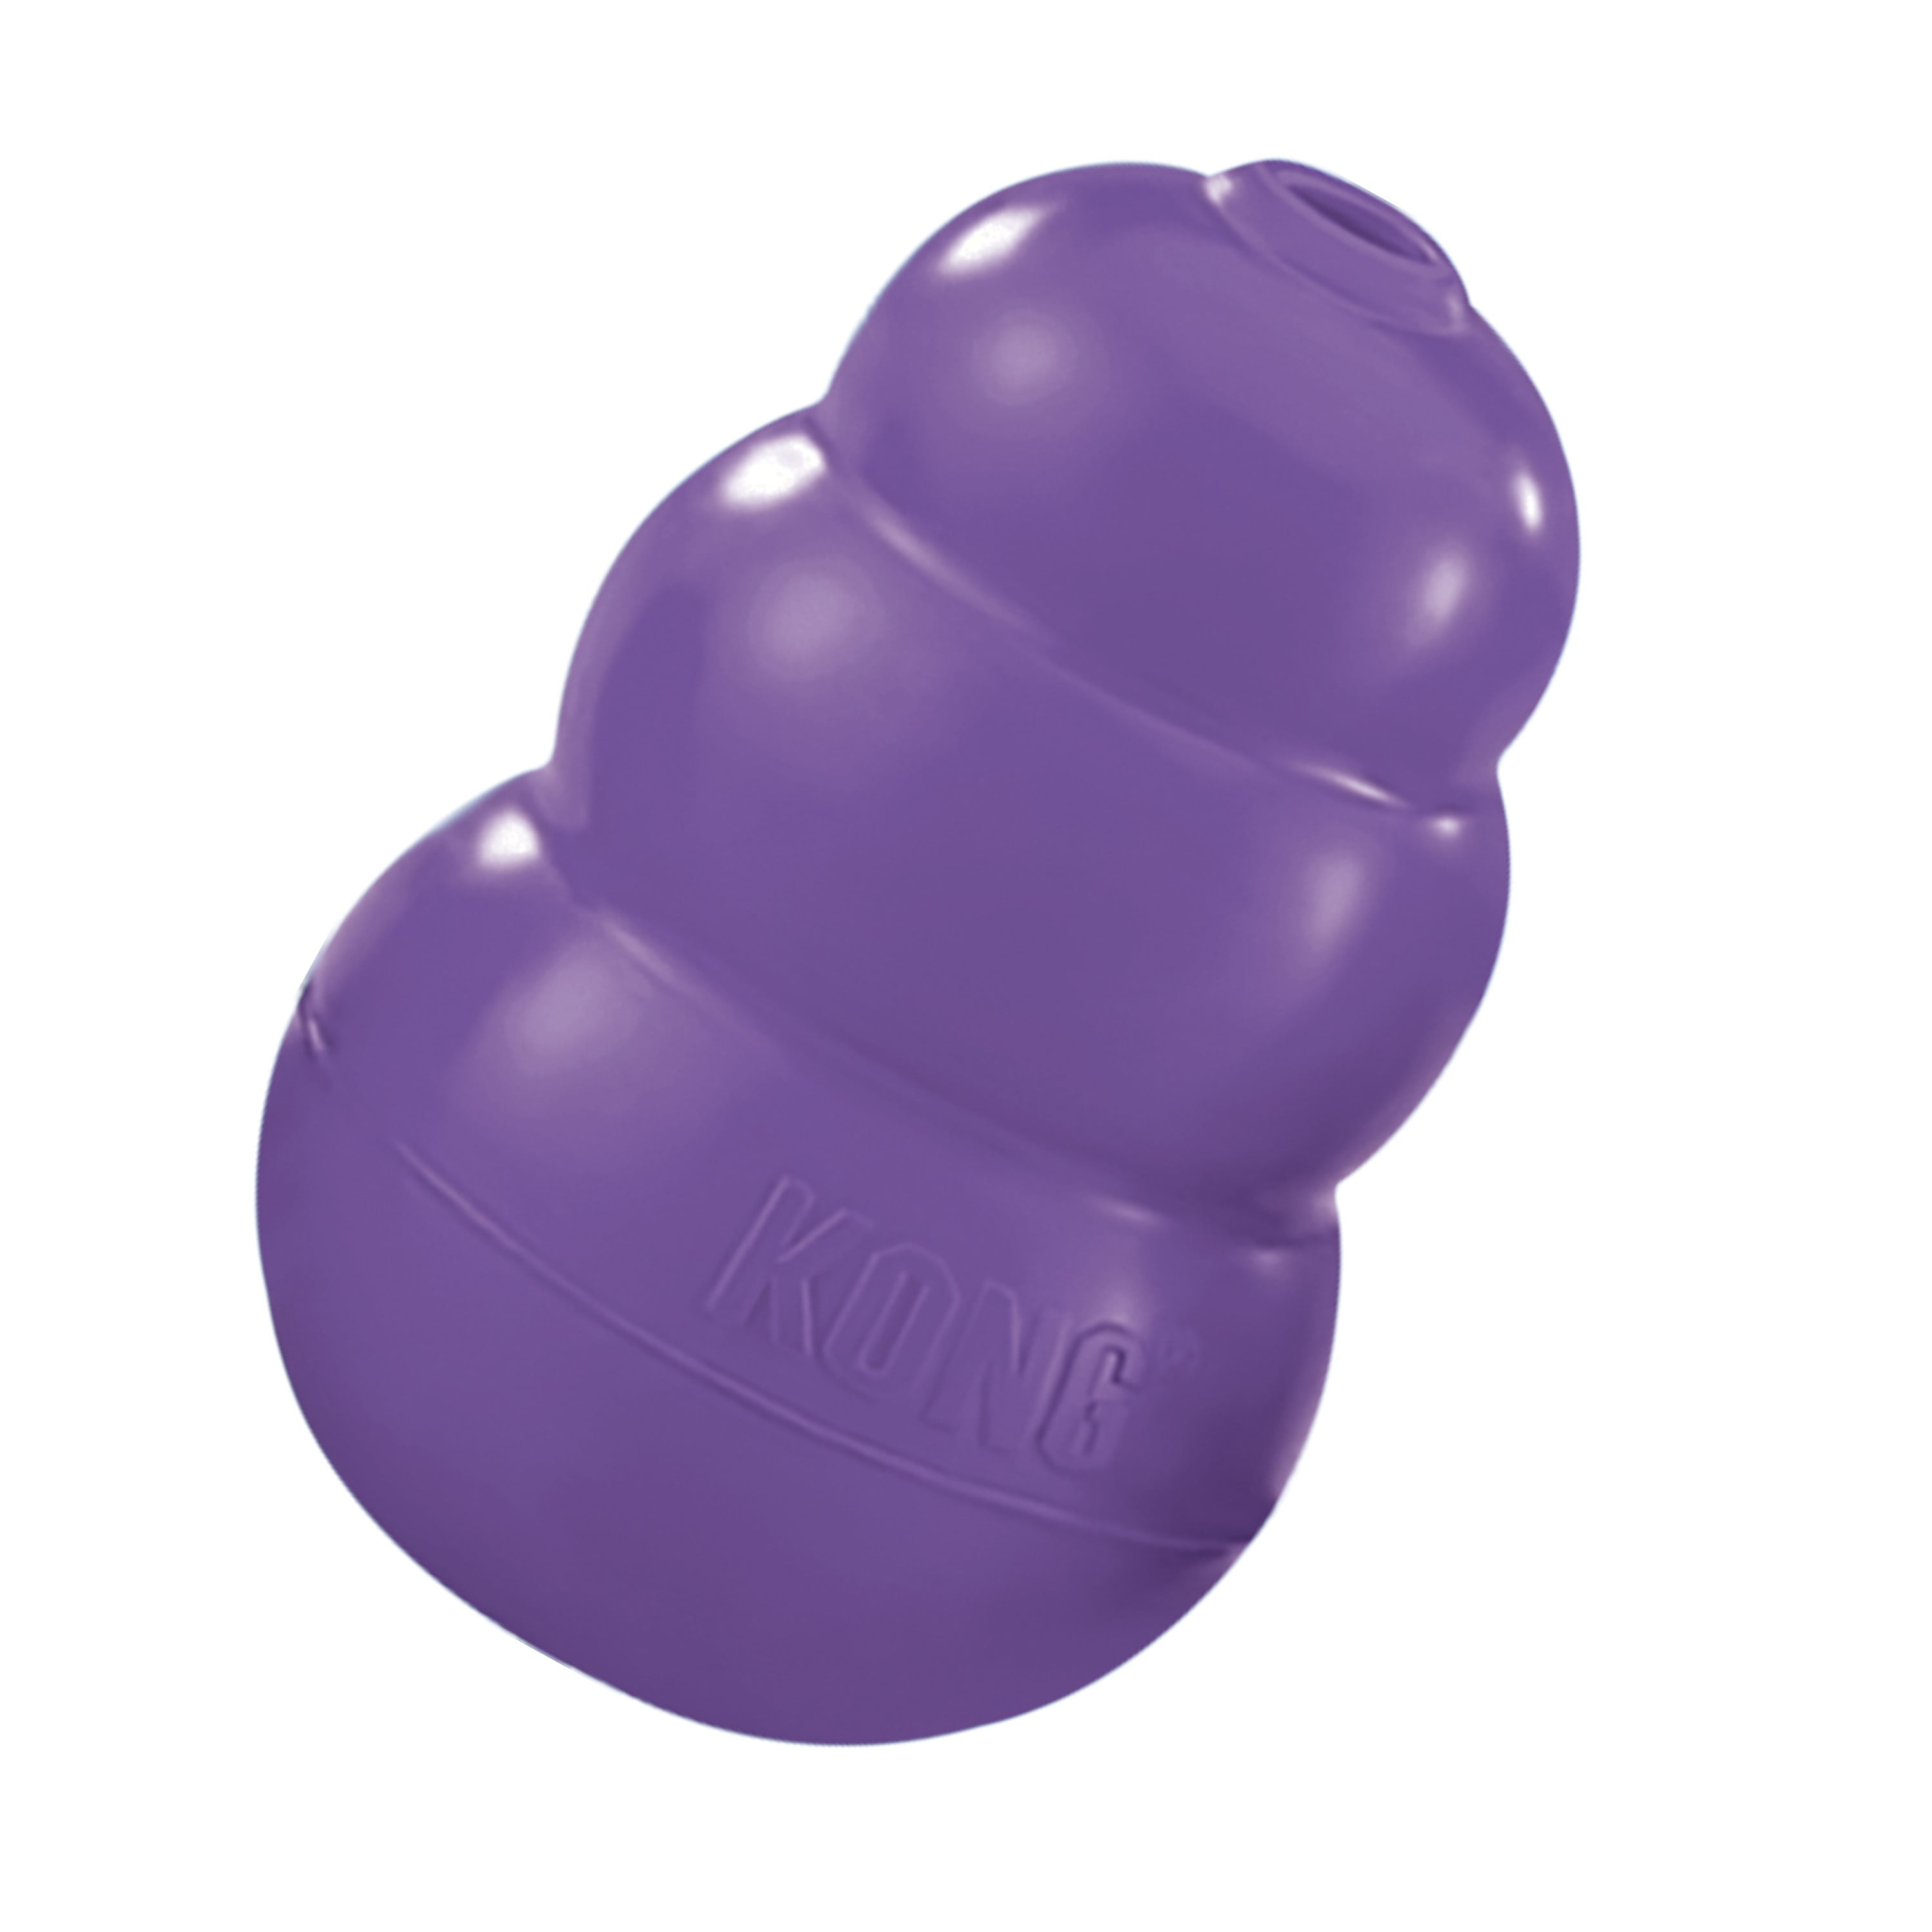 Kong Senior Dog Natural Rubber Toy, Large, Purple